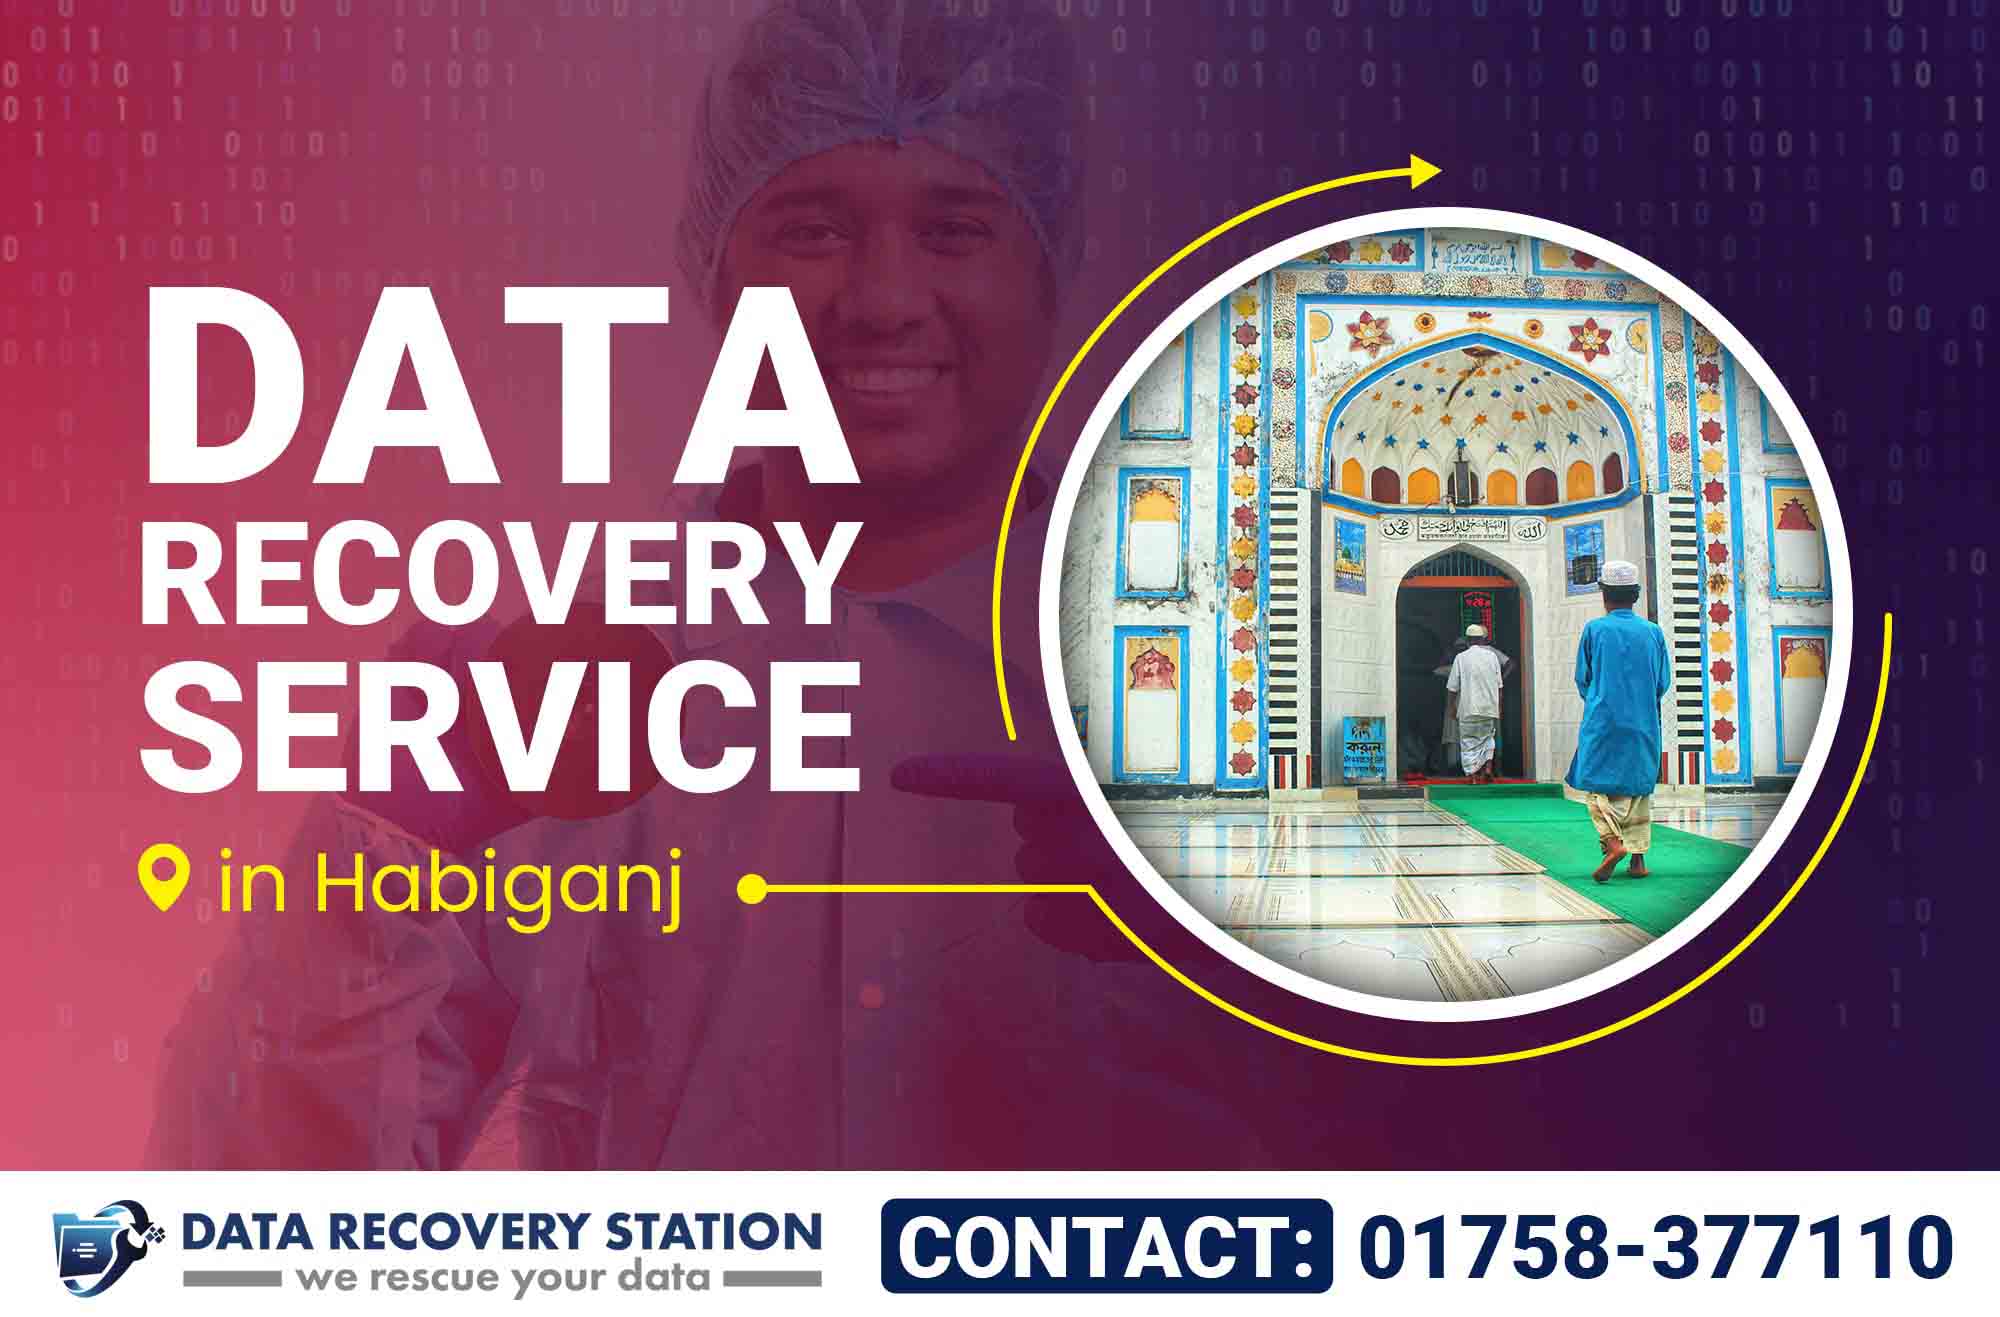 Data Recovery Service in Habiganj